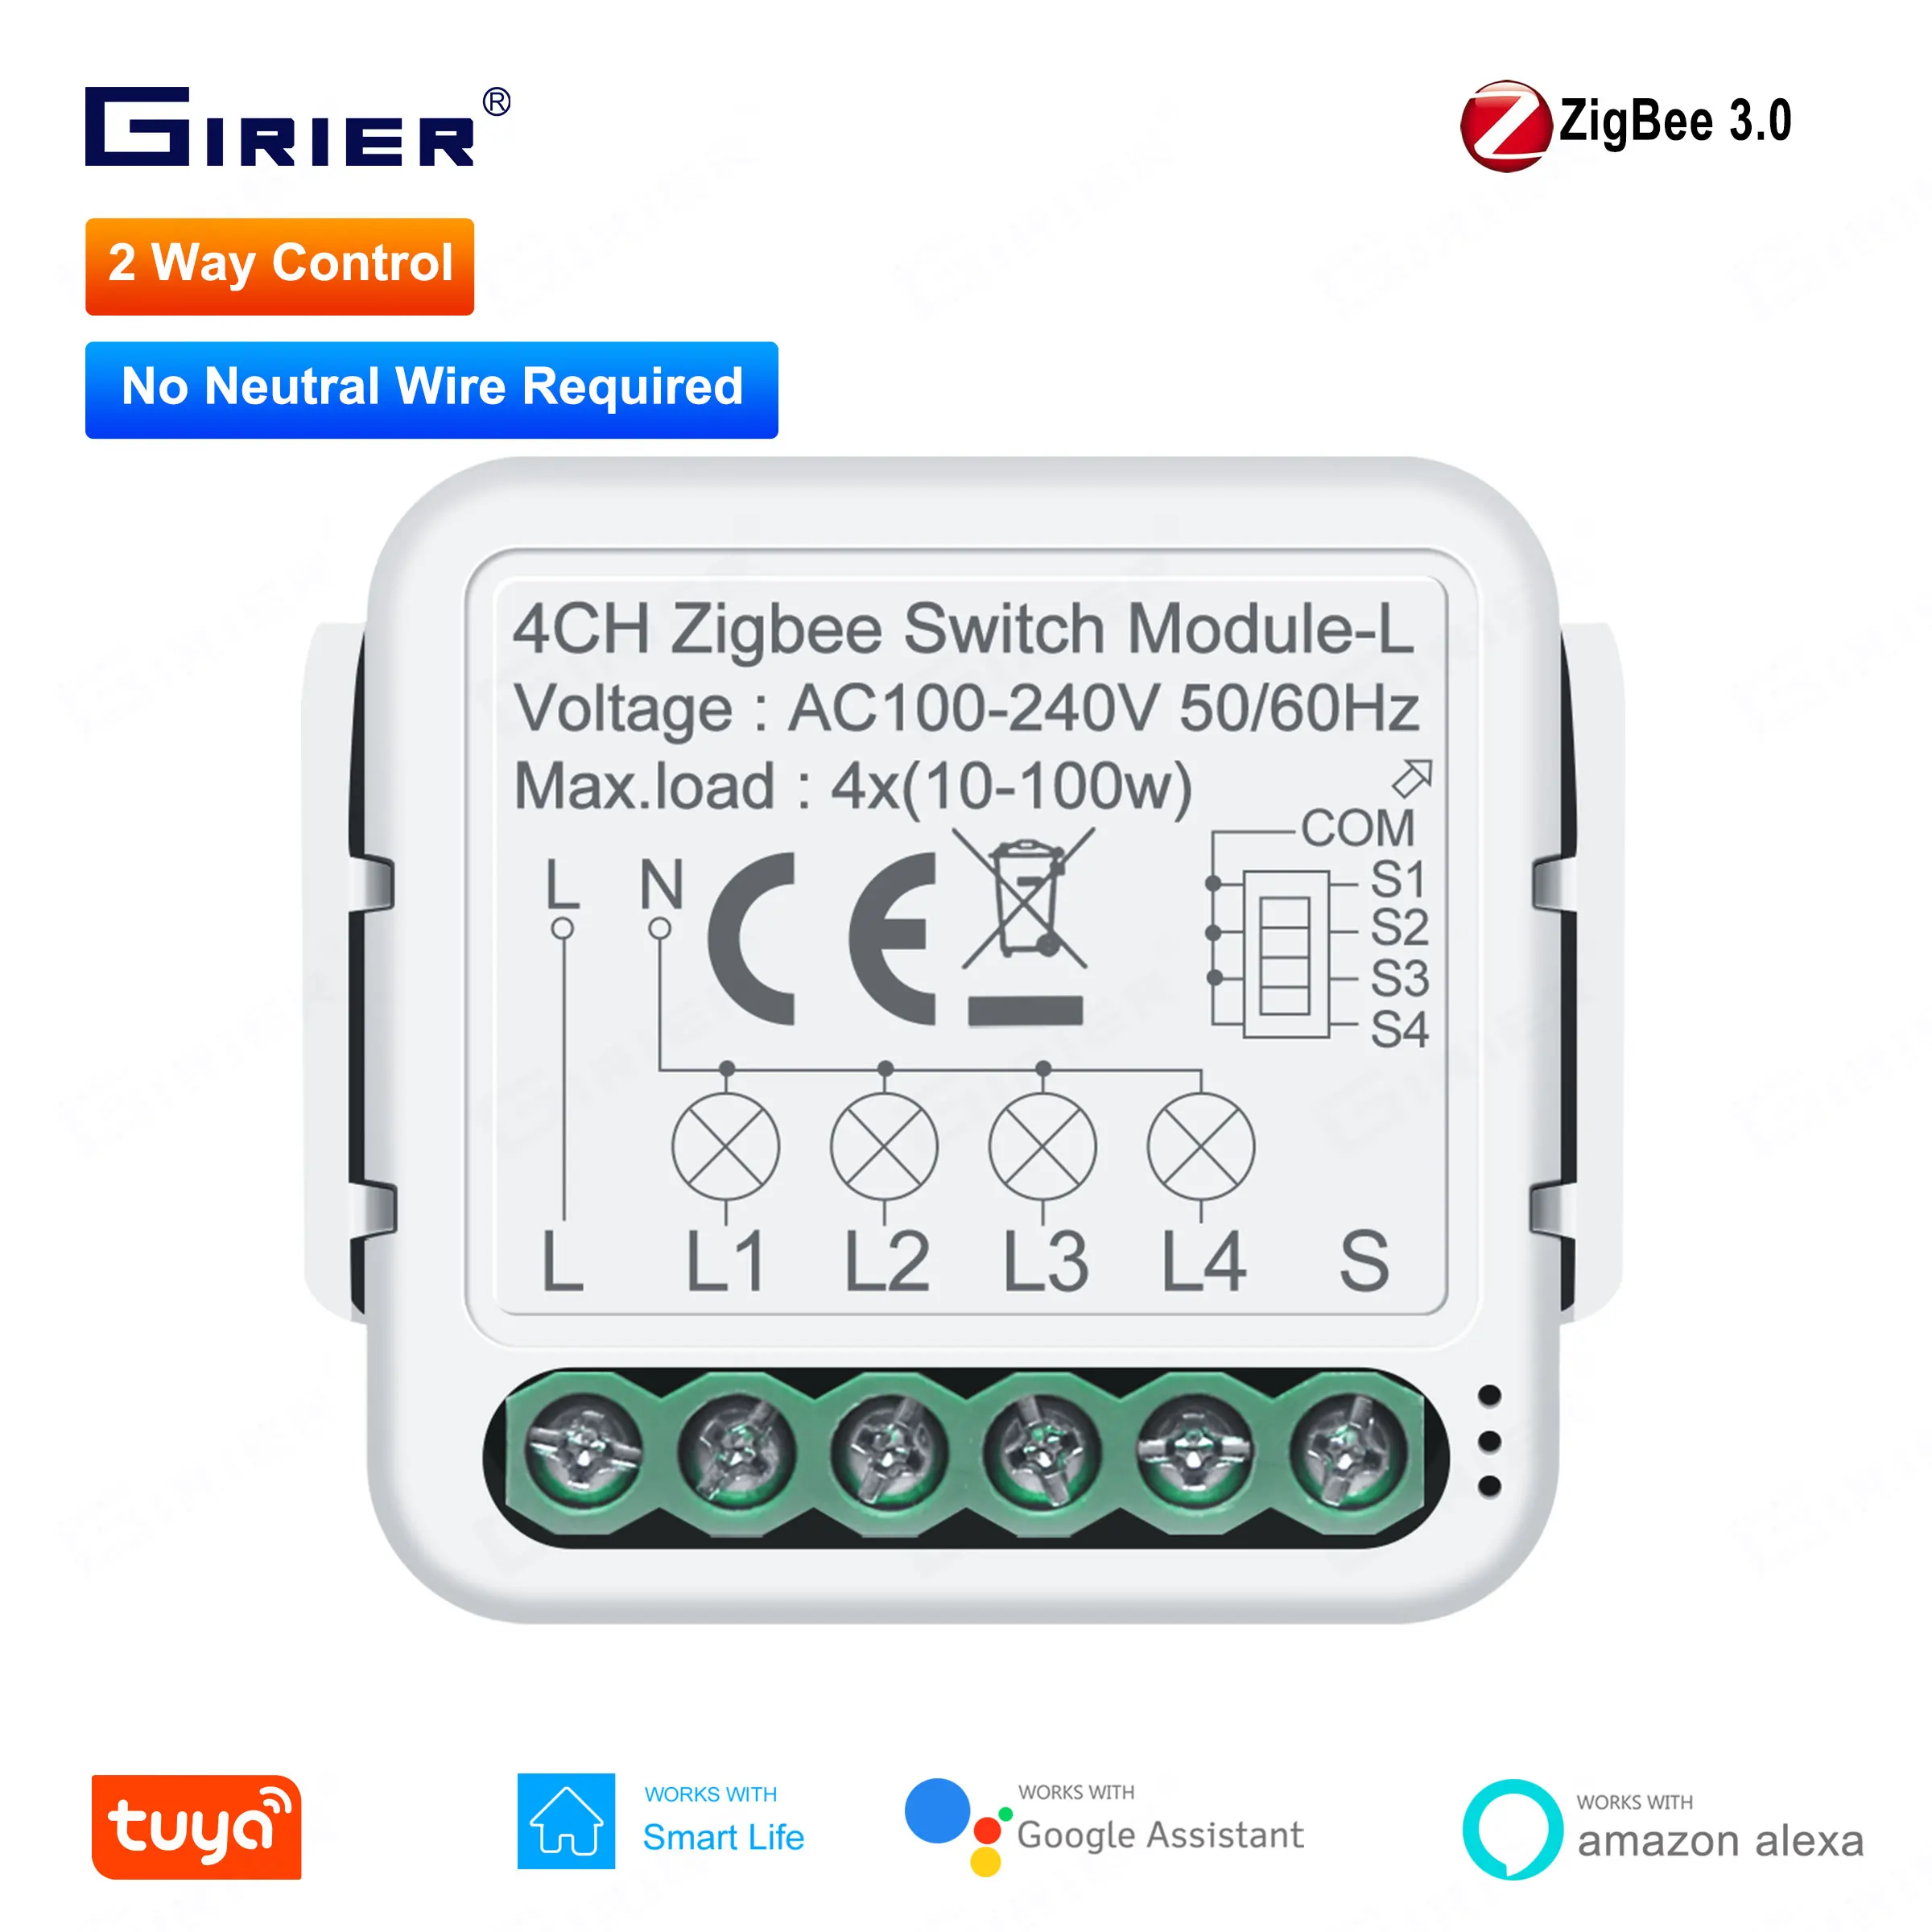 

GIRIER Tuya ZigBee 3.0 Smart Switch Module 4CH No Neutral Wire Required Supports 2 Way Control Works with Alexa Alice Hey Google